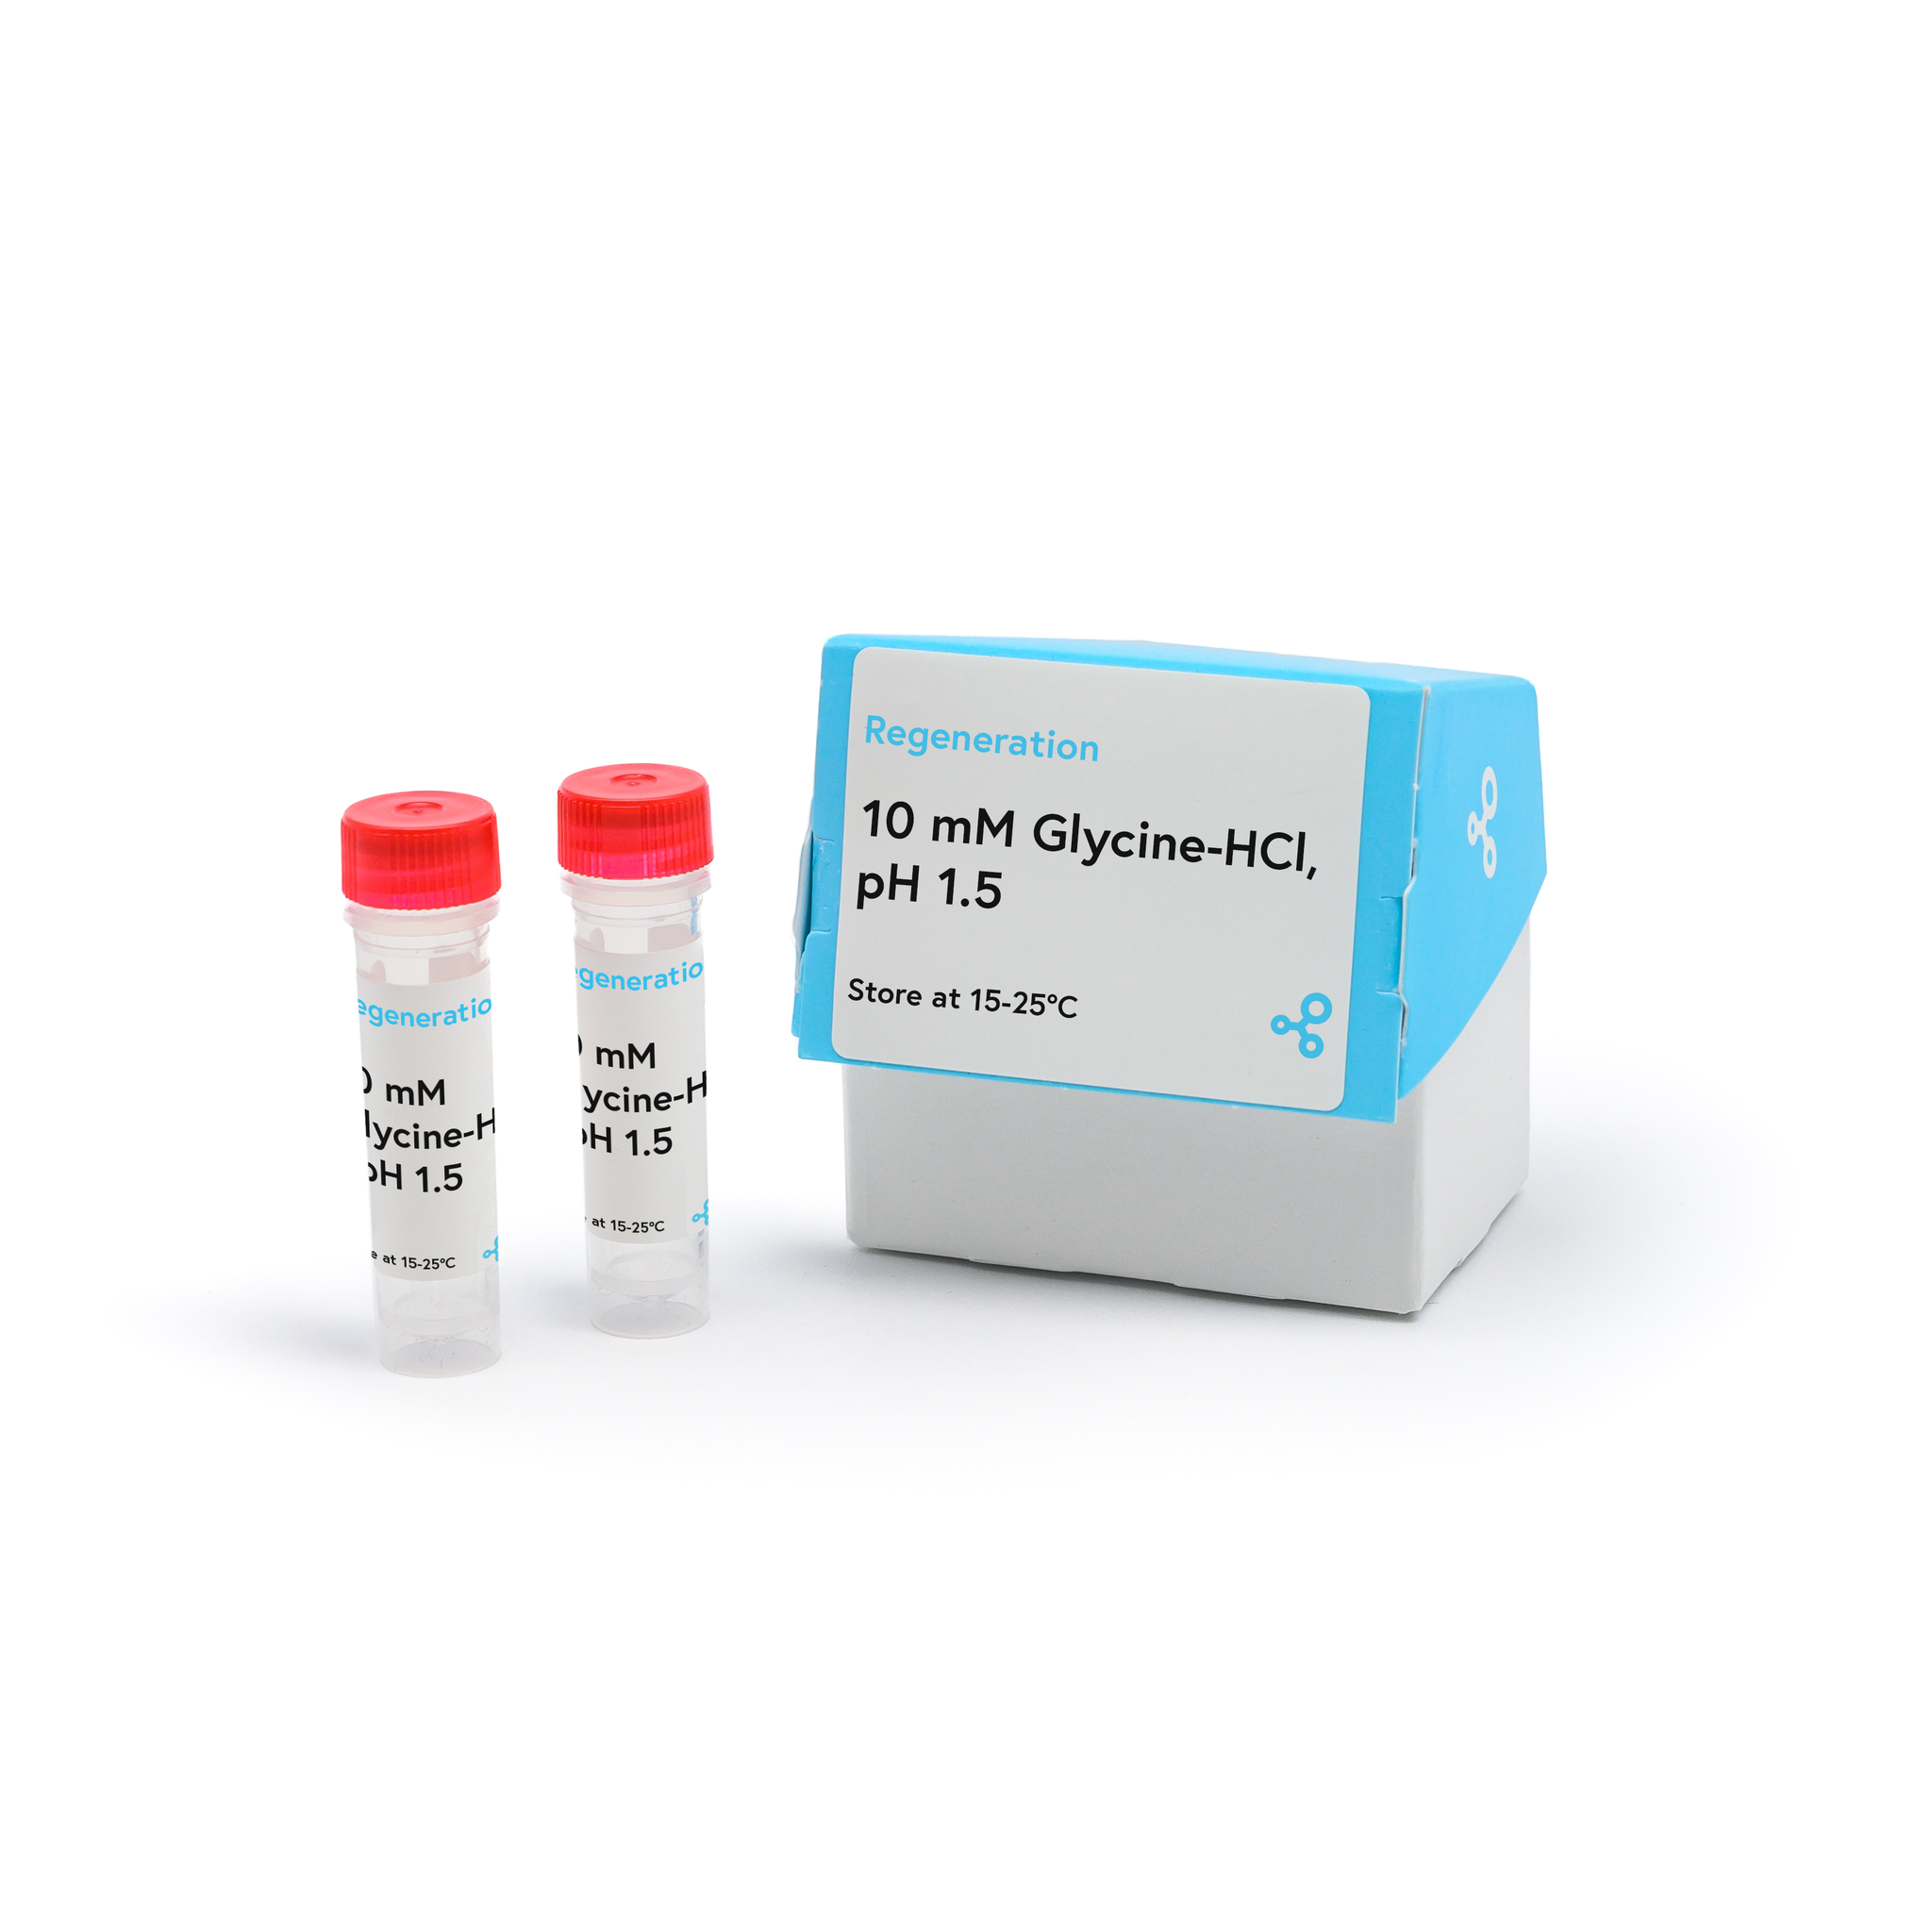 10 mM Glycine-HCl pH 1.5